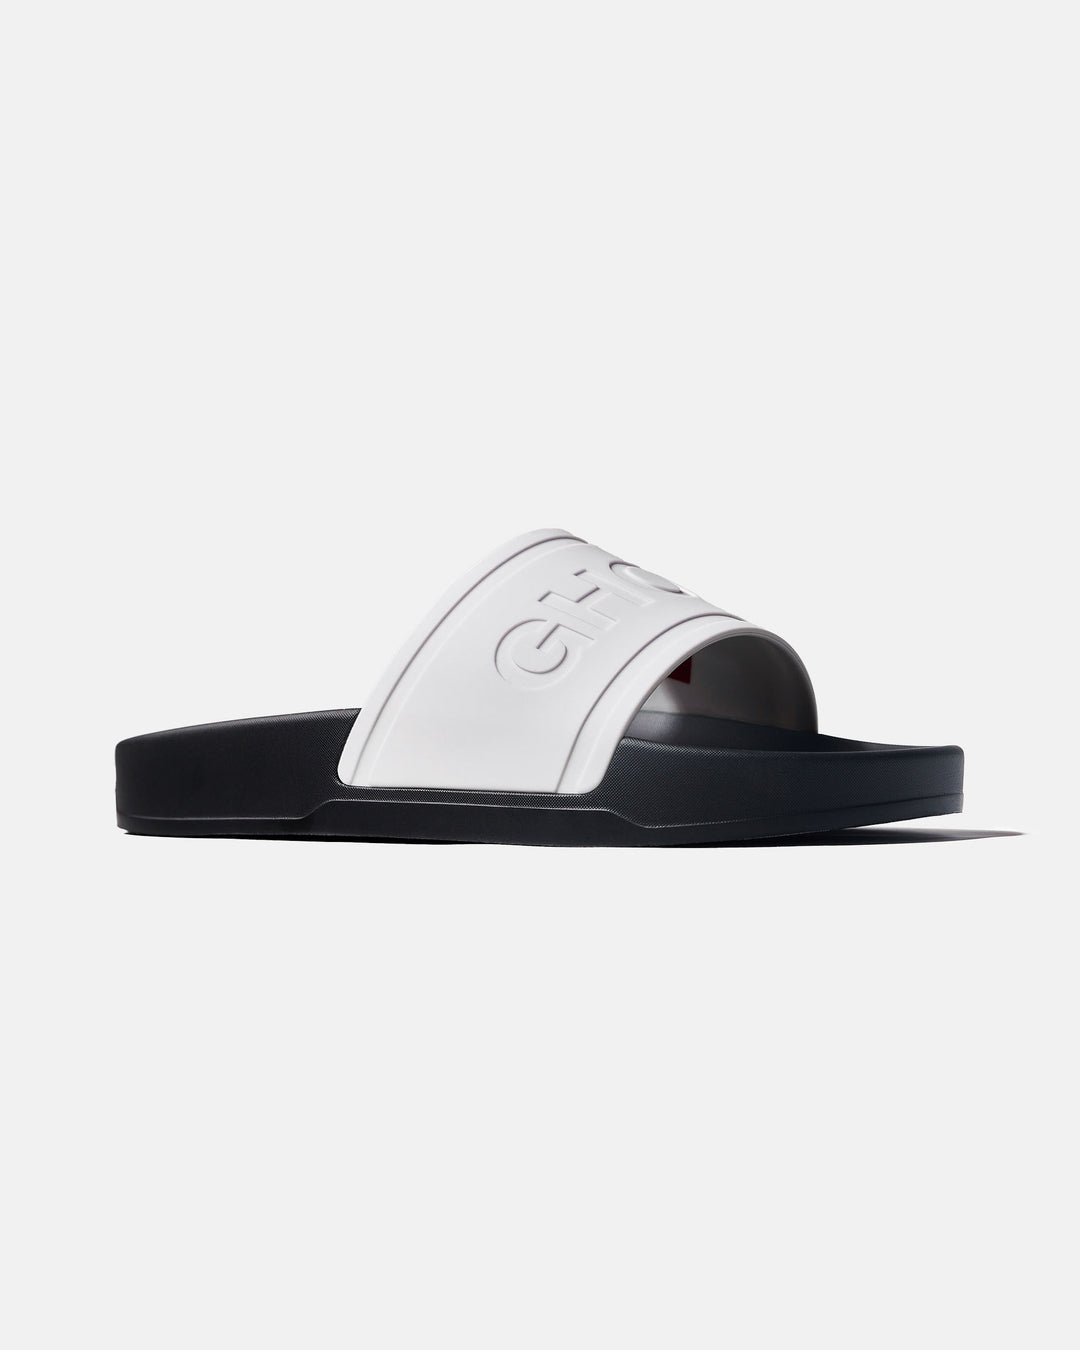 Black and White Slides Footwear